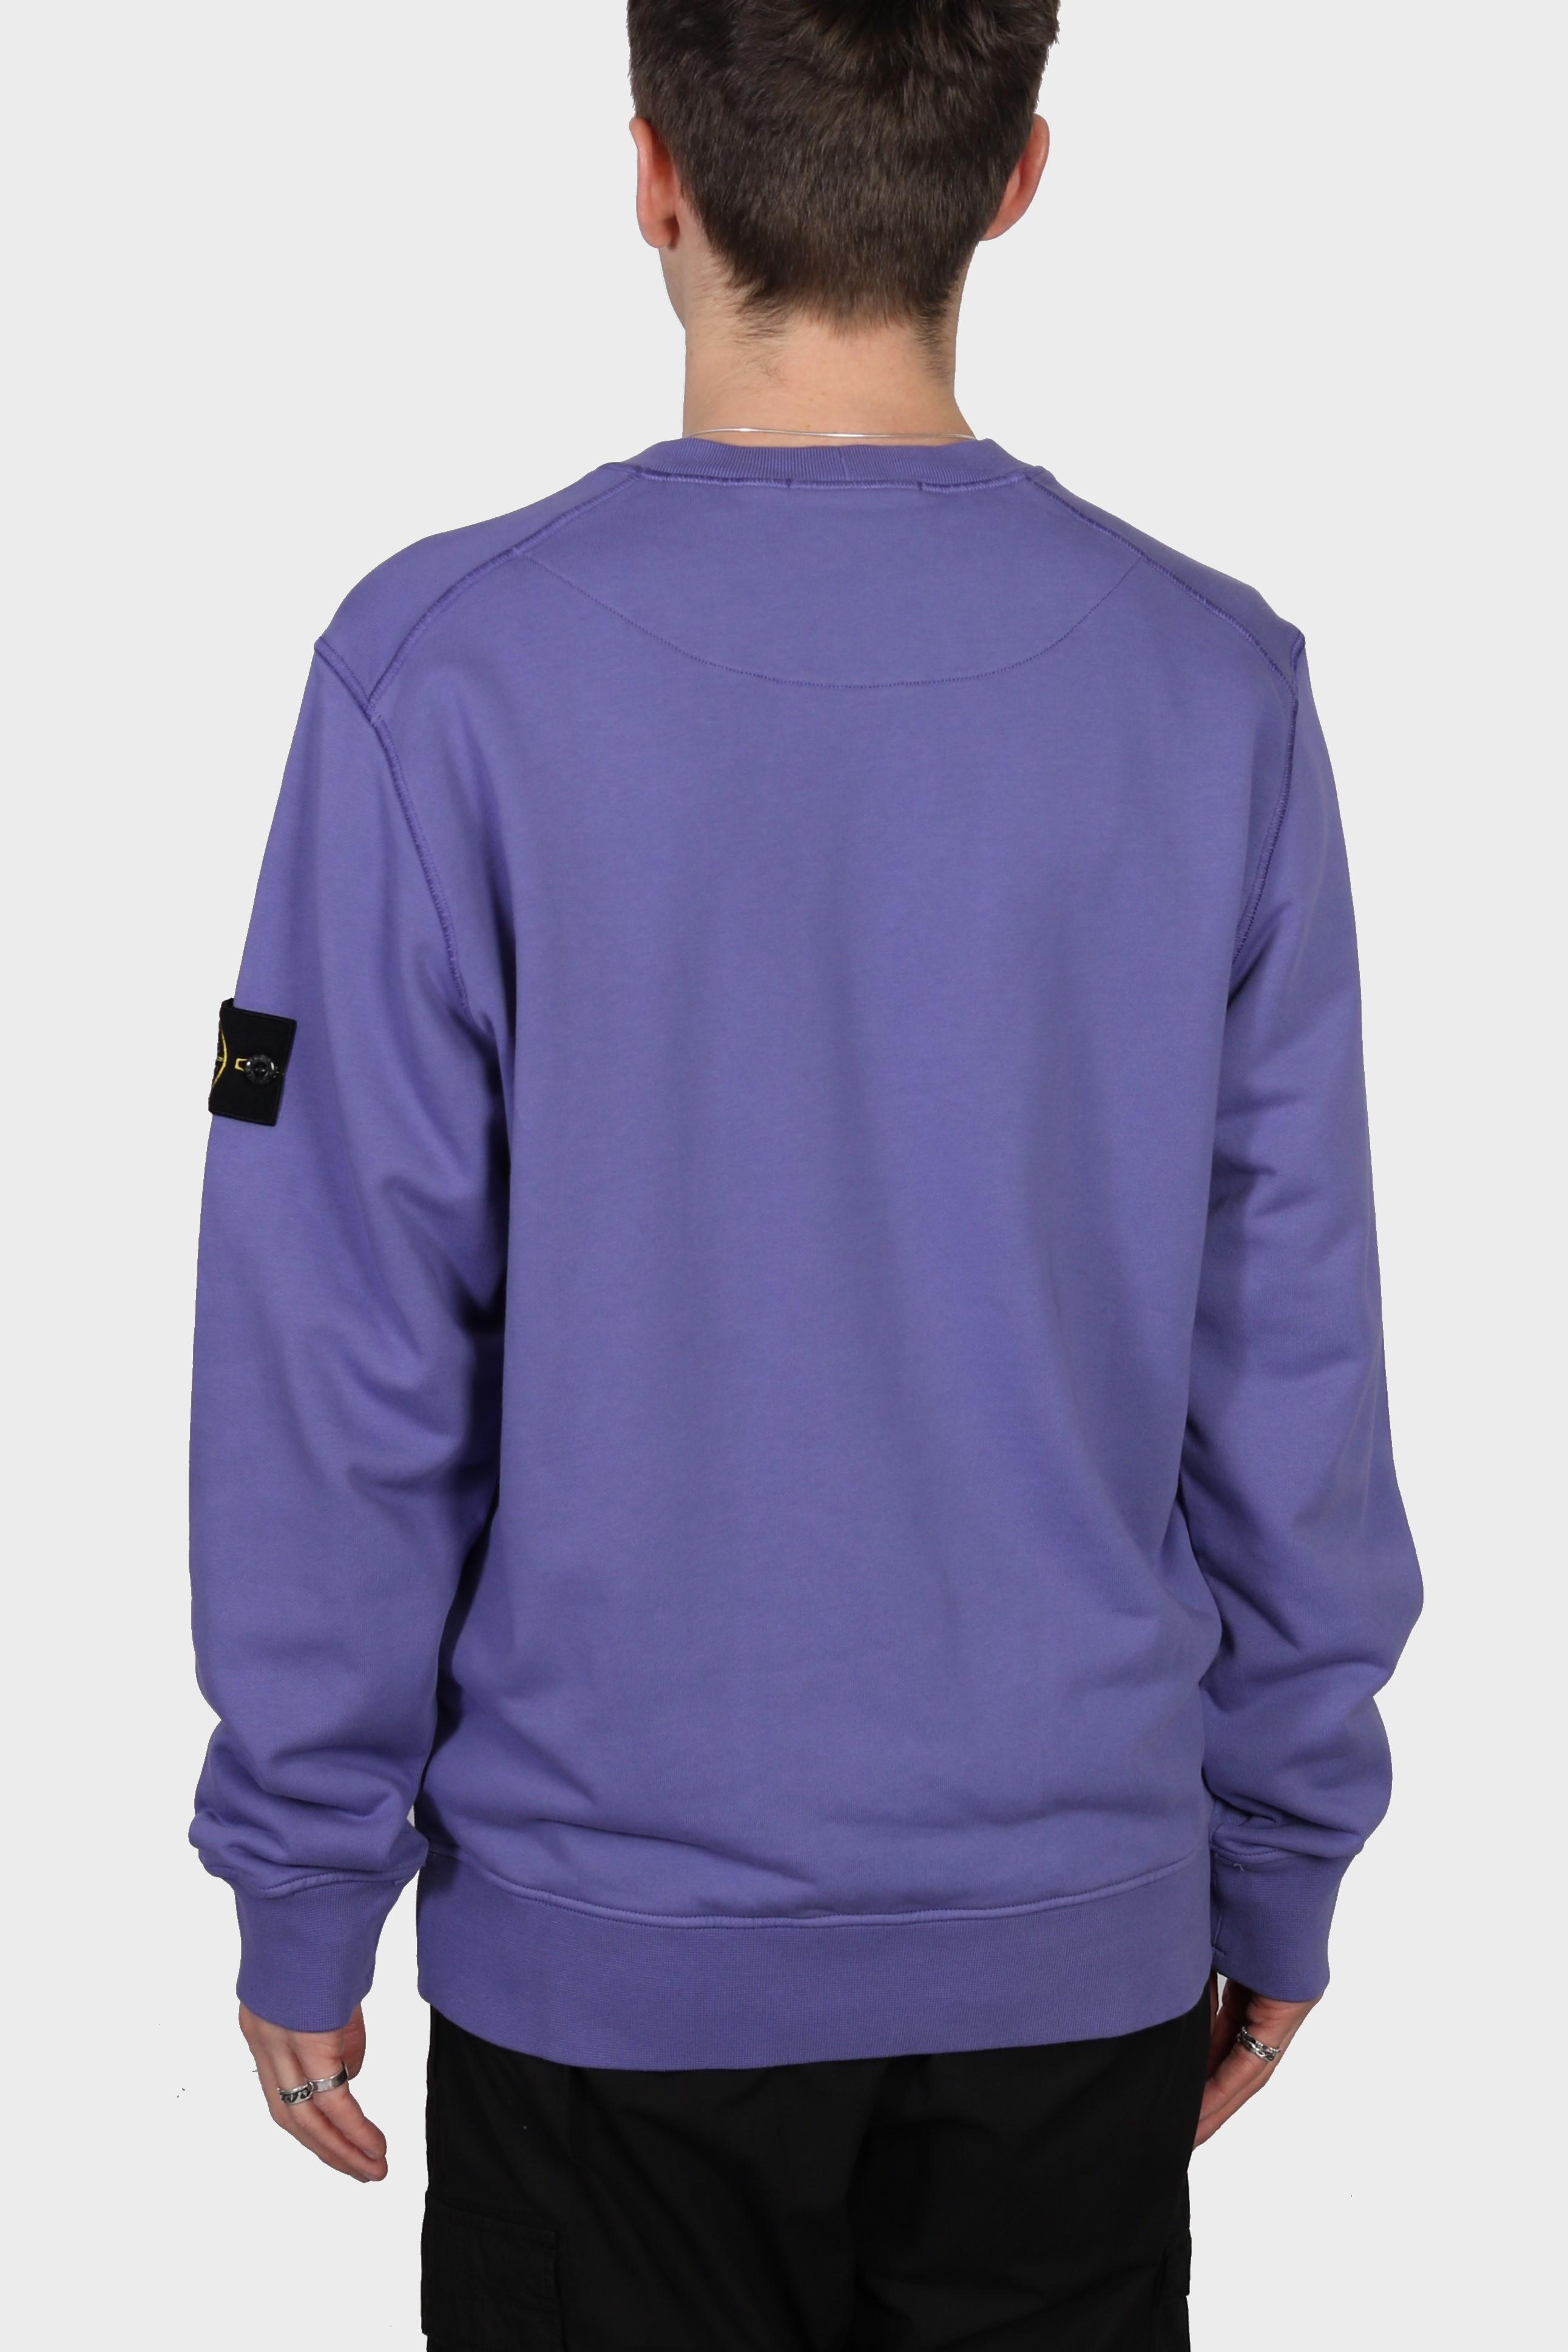 STONE ISLAND Sweatshirt in Lilac S